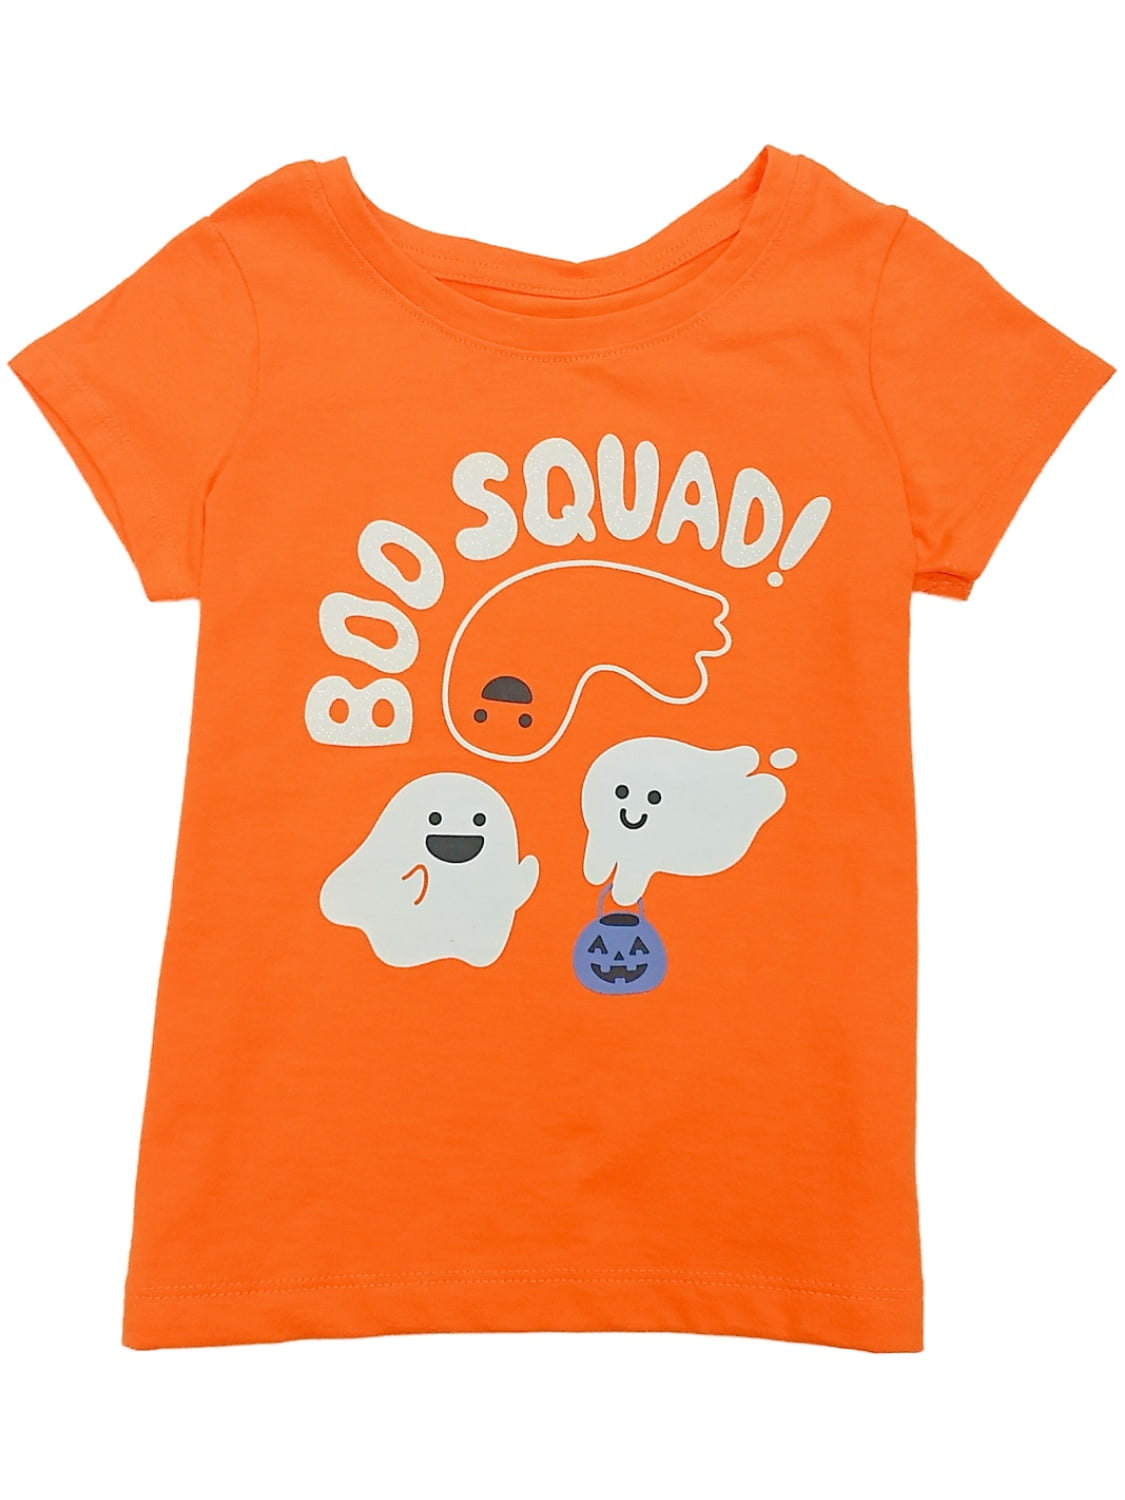 Boo Shirt for kids,Boo Shirt for Girls Buffalo Plaid Boo Boo shirt for men Boo shirt for women Boo shirt for boys Halloween shirt